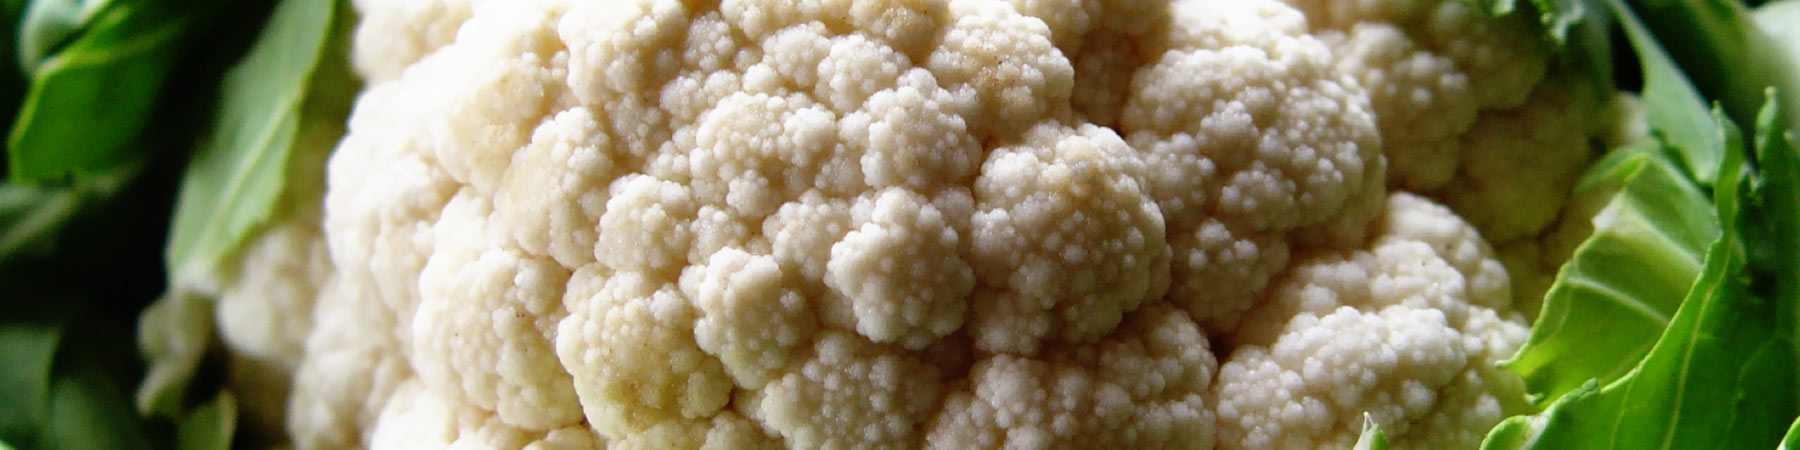 Producers, Suppliers and Distributors of Cauliflower - Marismas de Lebrija